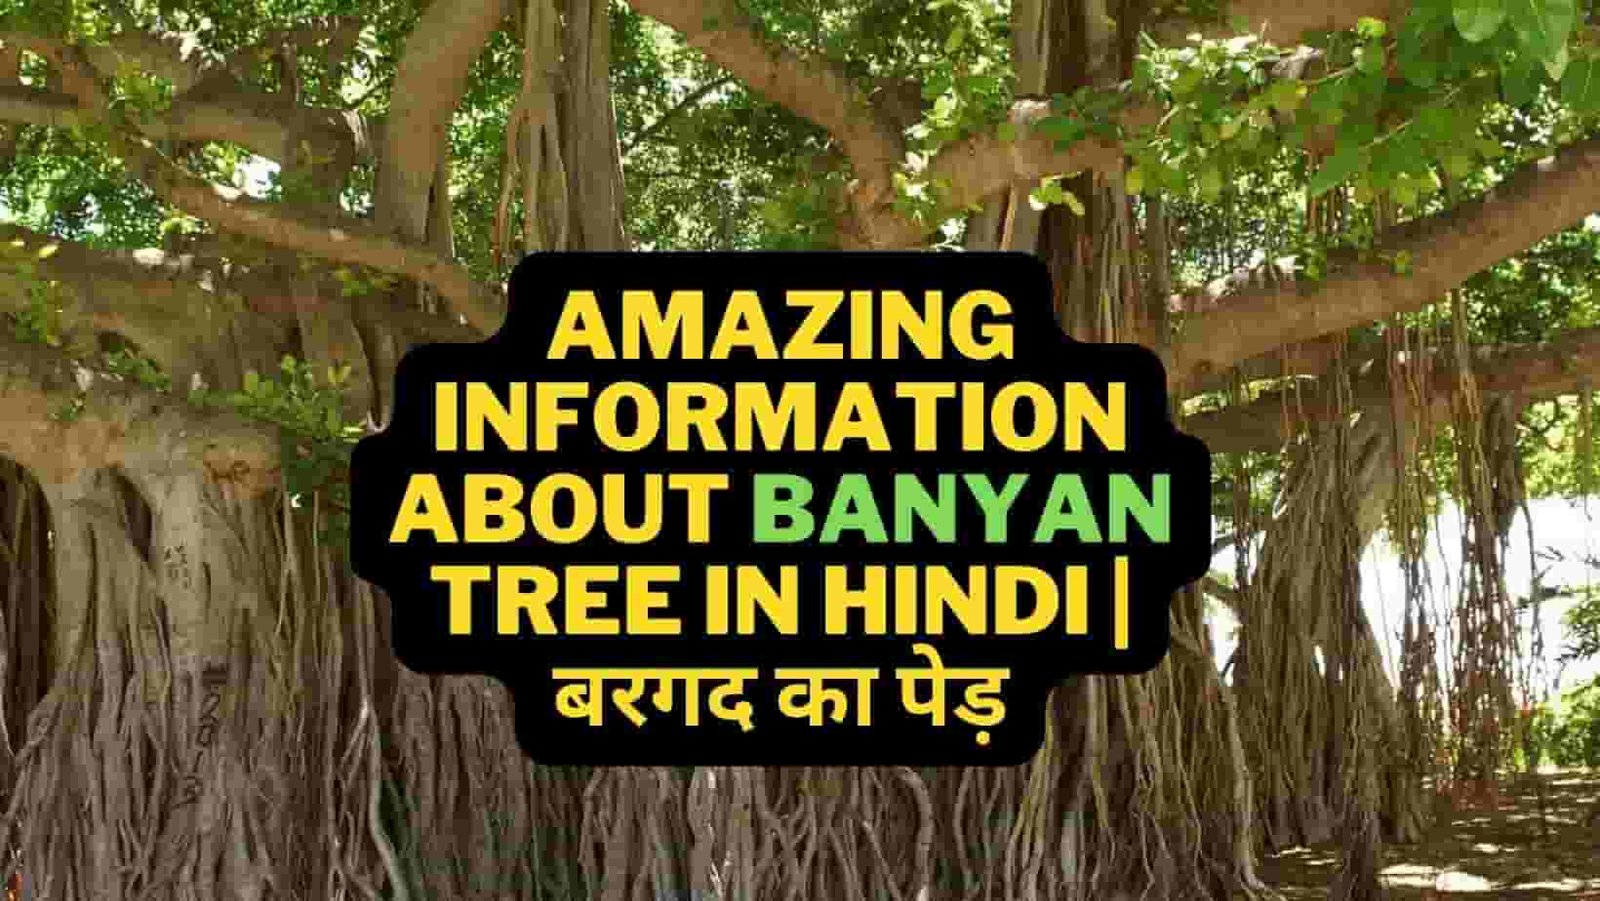 Information about Banyan Tree in Hindi